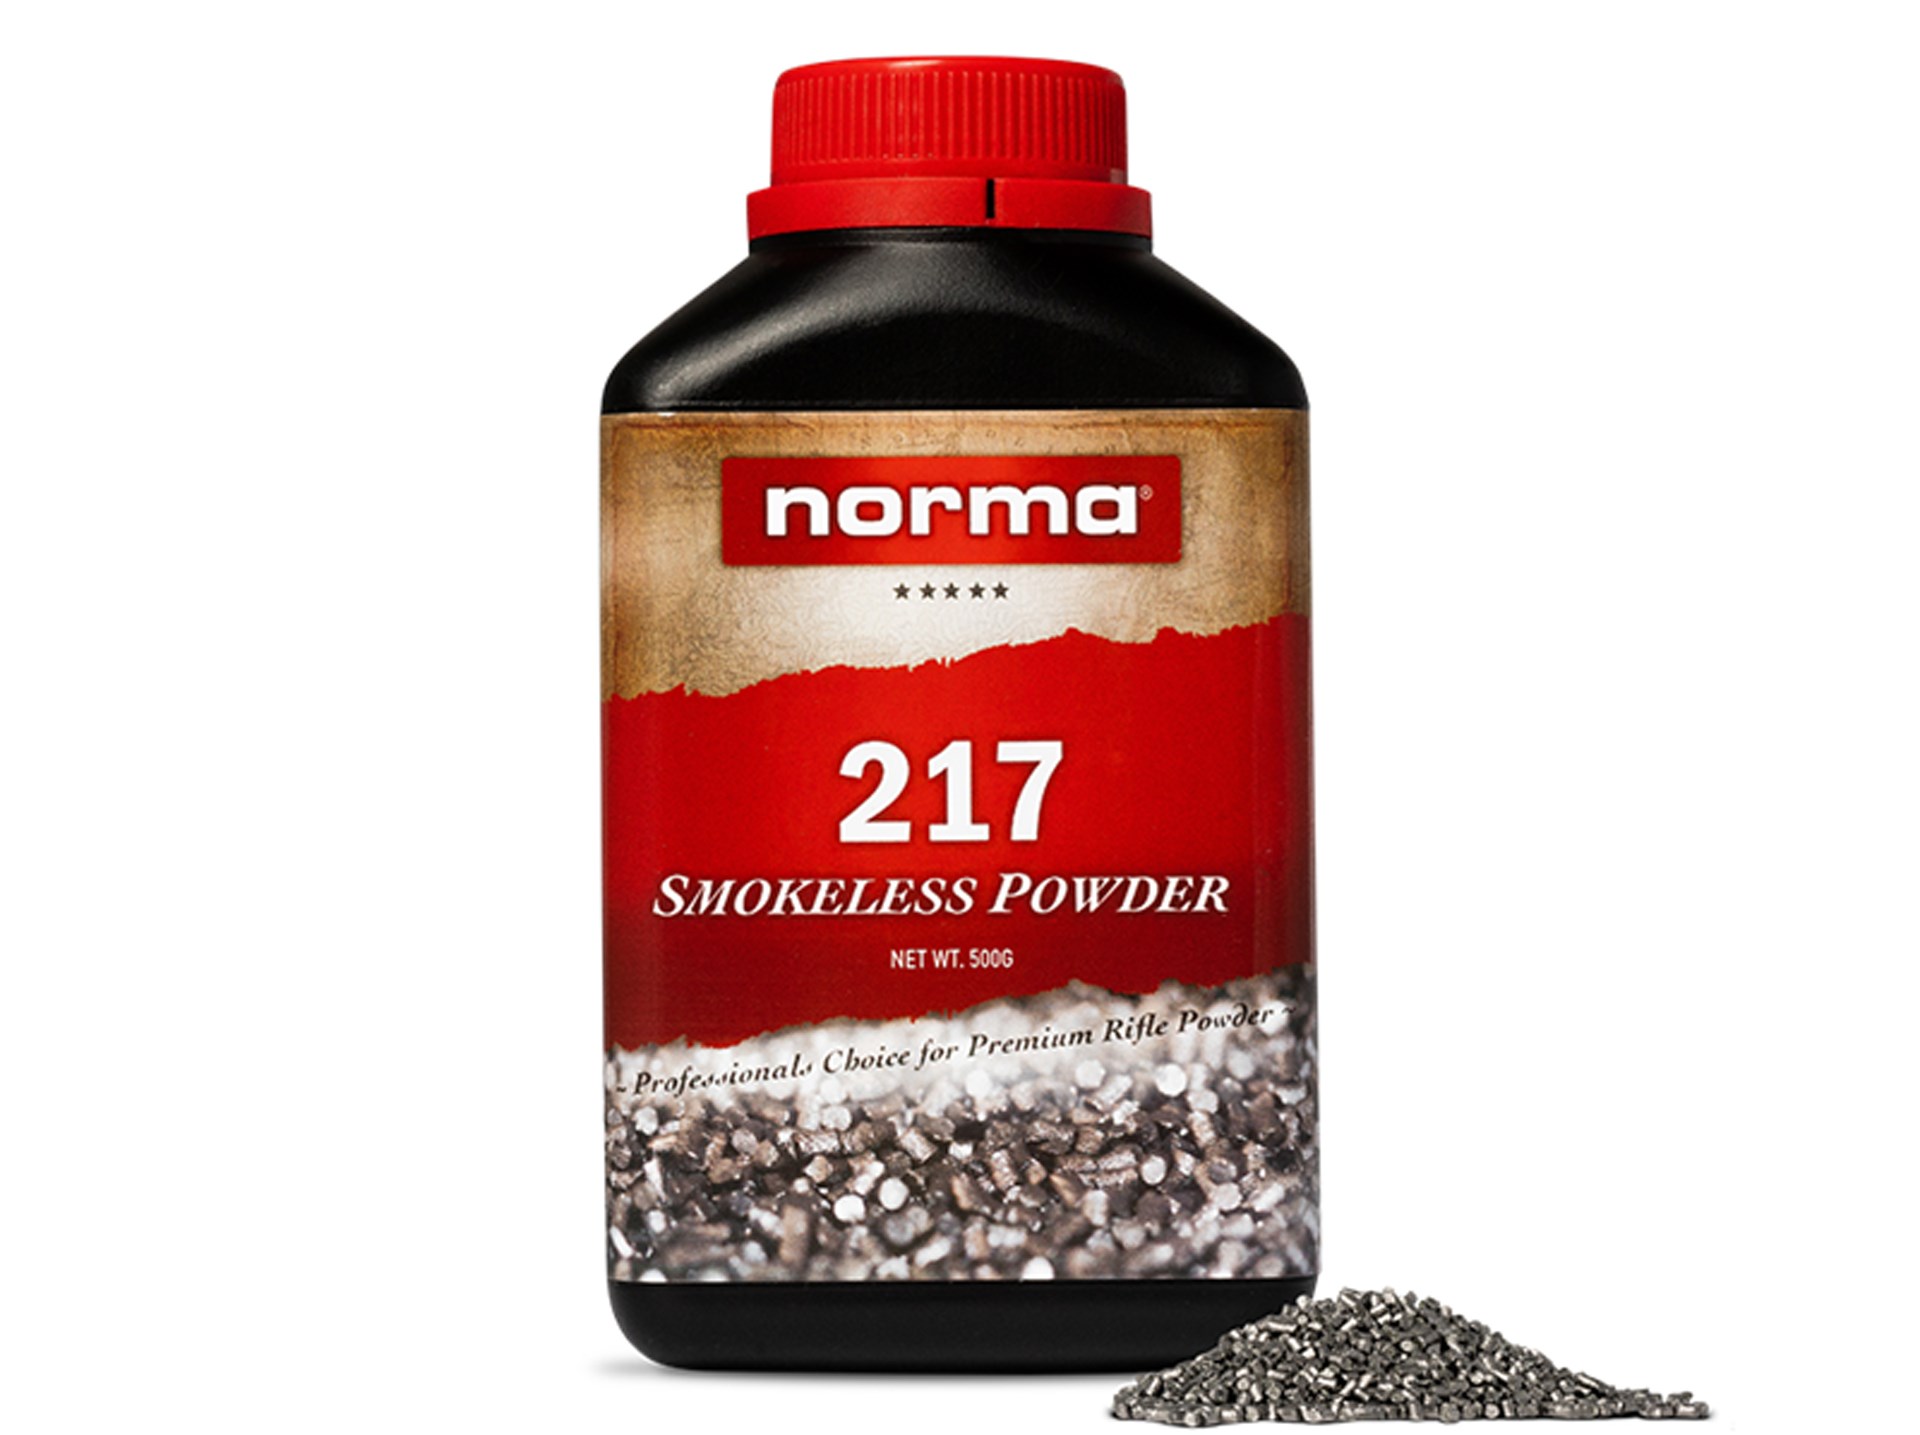 Norma 217 smokeless powder can jug jar red label black bottle gunpowder reloading ammunition